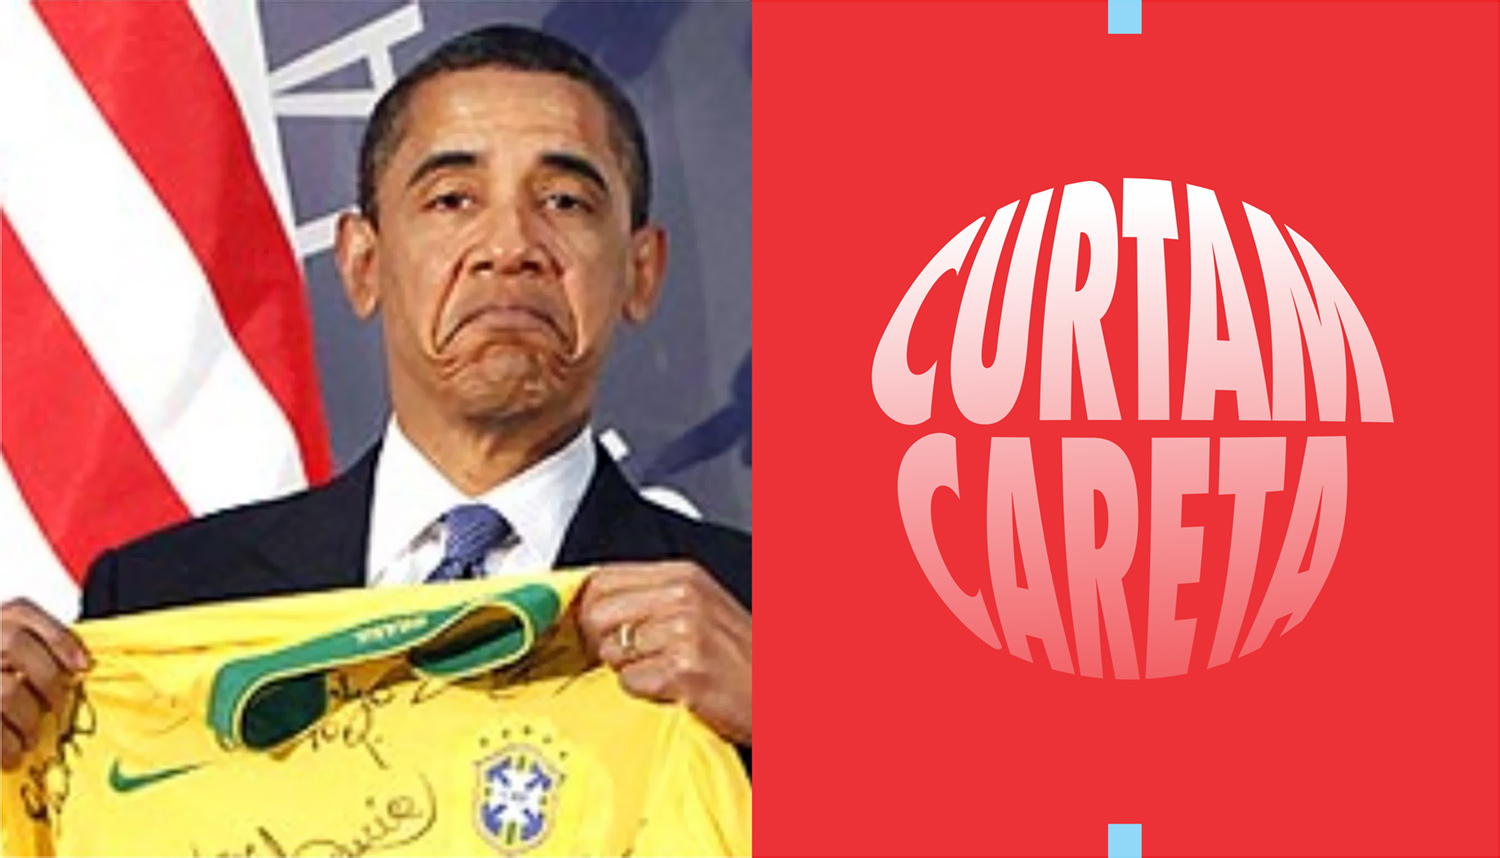 curtam-careta-barack-obama